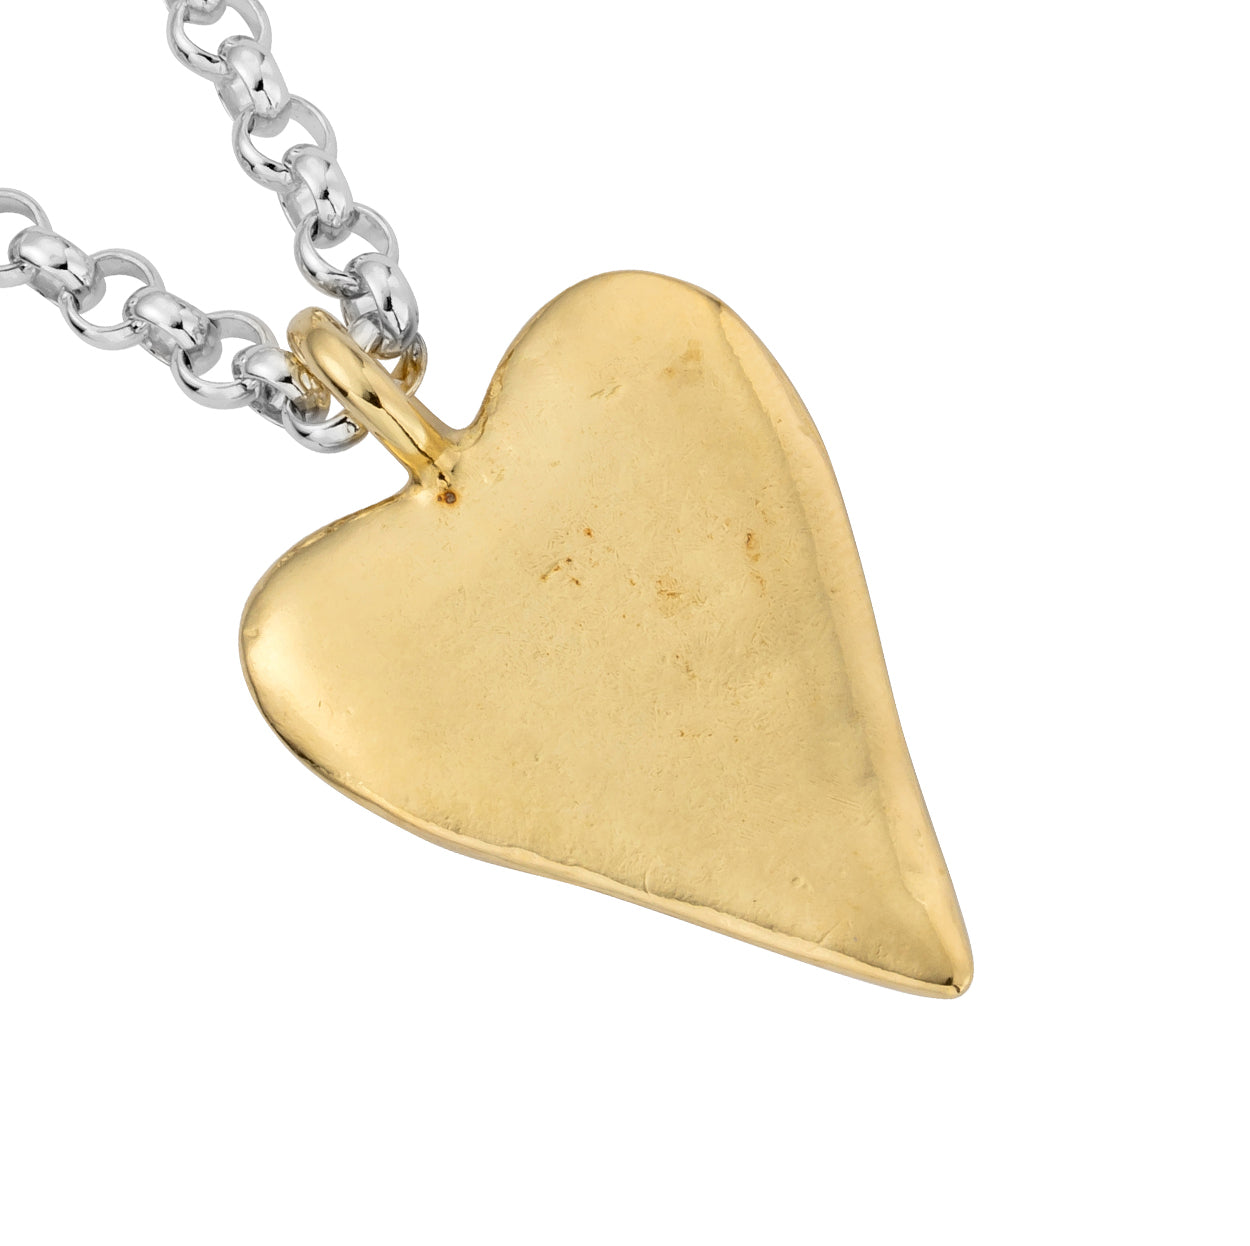 Silver & Gold Maxi Heart Necklace